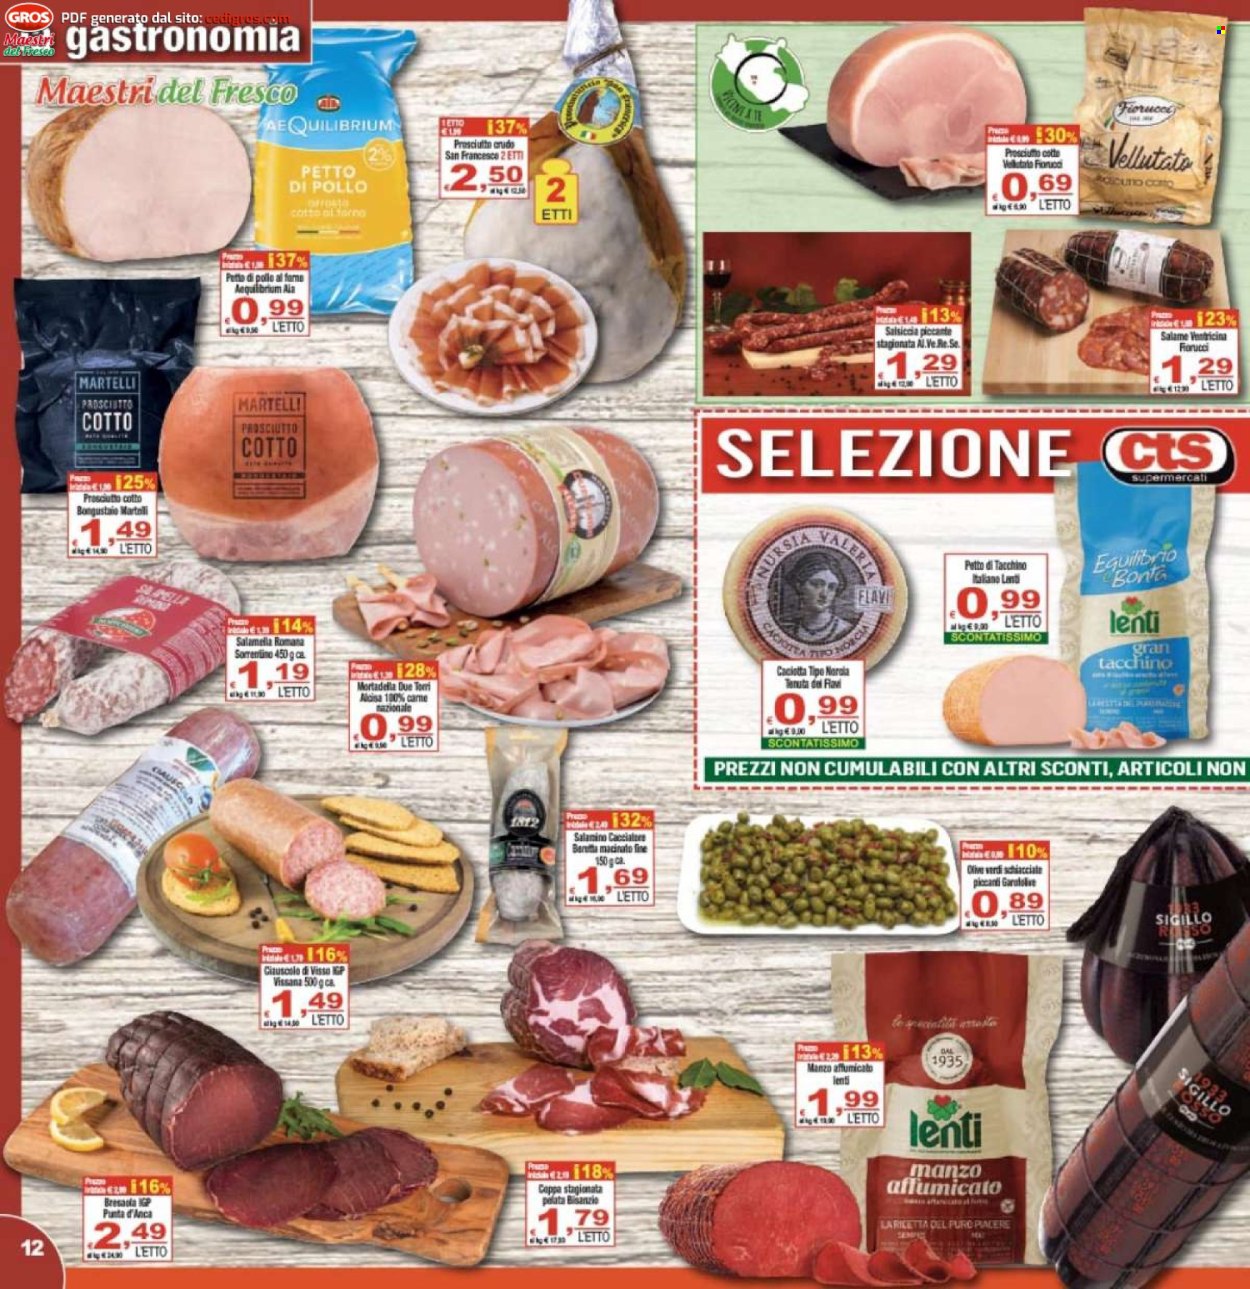 Volantino CTS supermercati - 19.4.2024 - 25.4.2024.